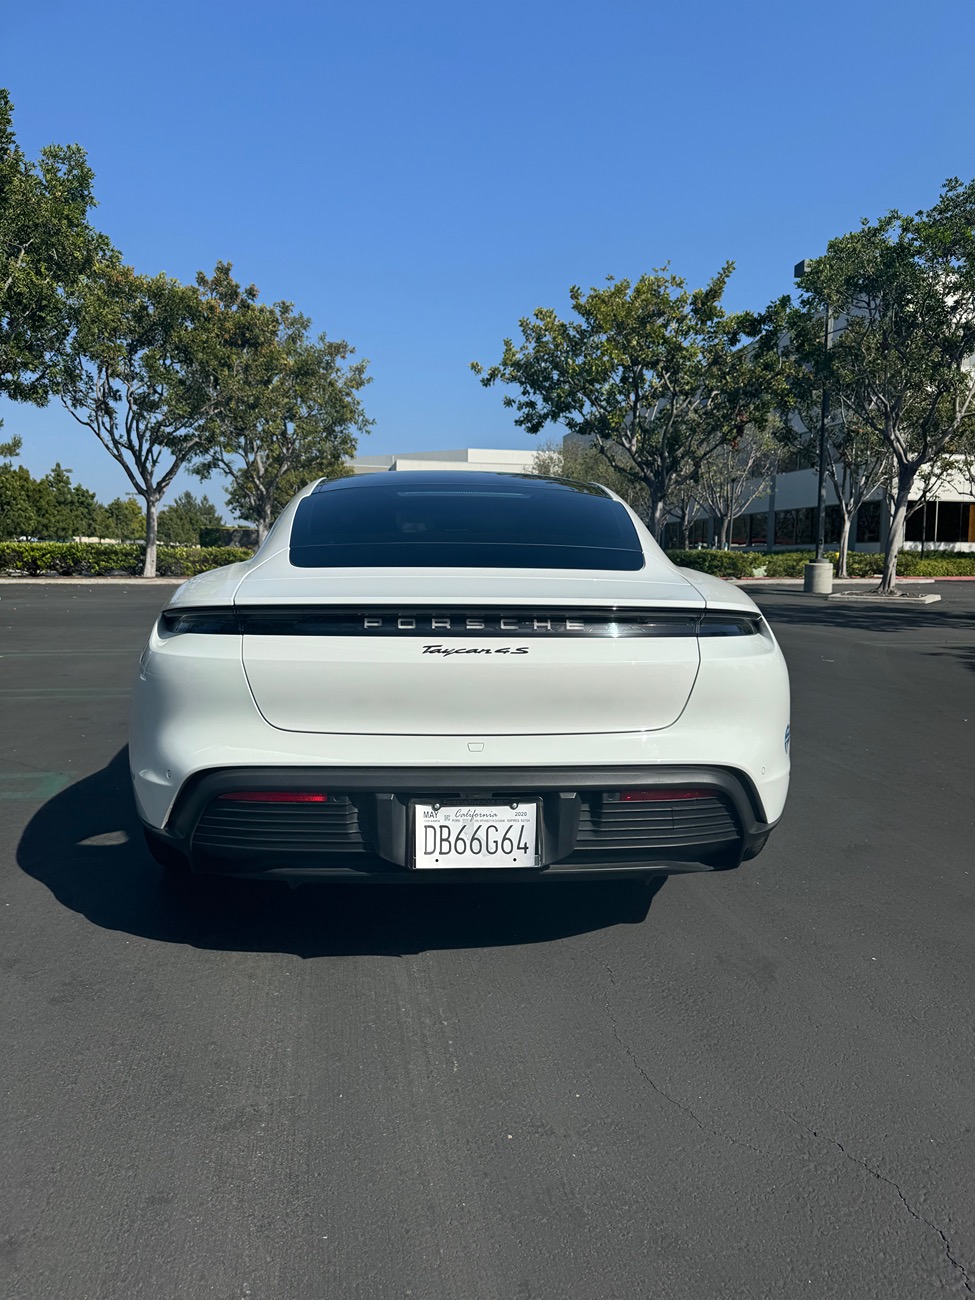 Porsche Taycan [Orange County, CA] 2020 Porsche Taycan 4S - White Exterior, Bordeaux Red Leather, 21in Mission E Wheels, ACC, Premium Package IMG_4314